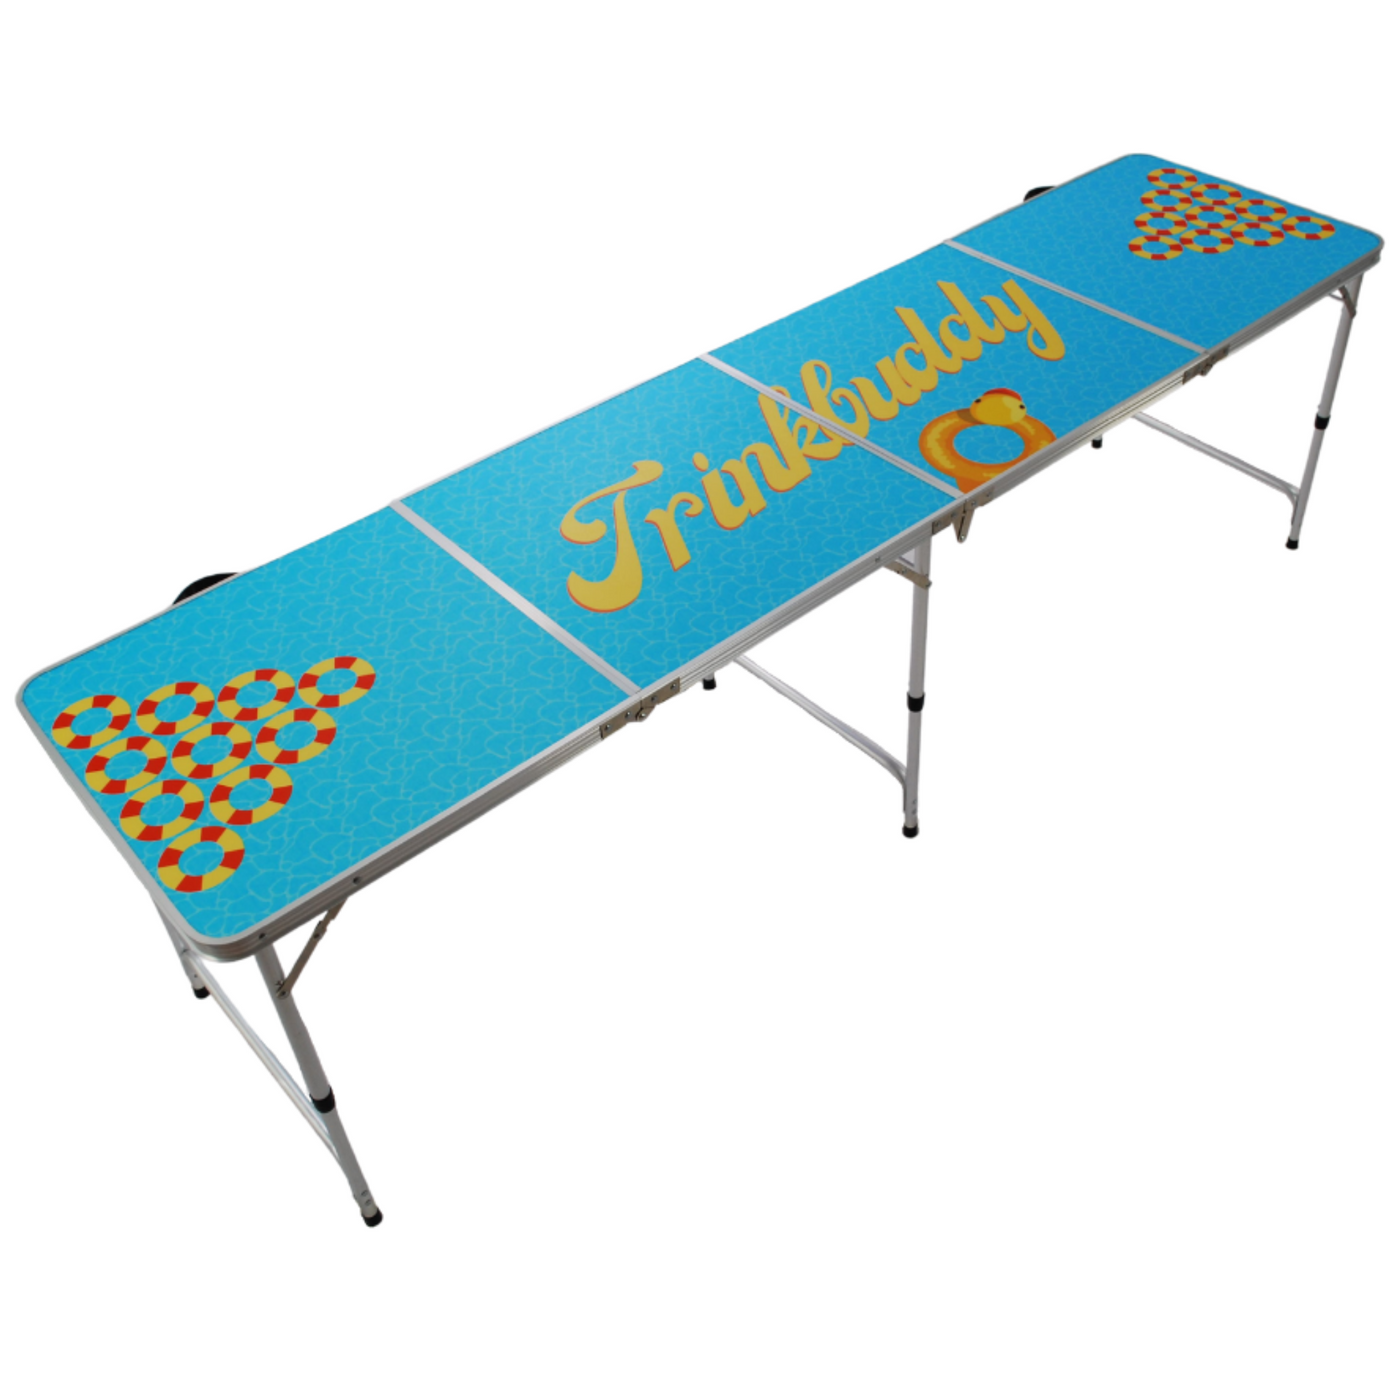 Poolparty - Beer Pong Tisch